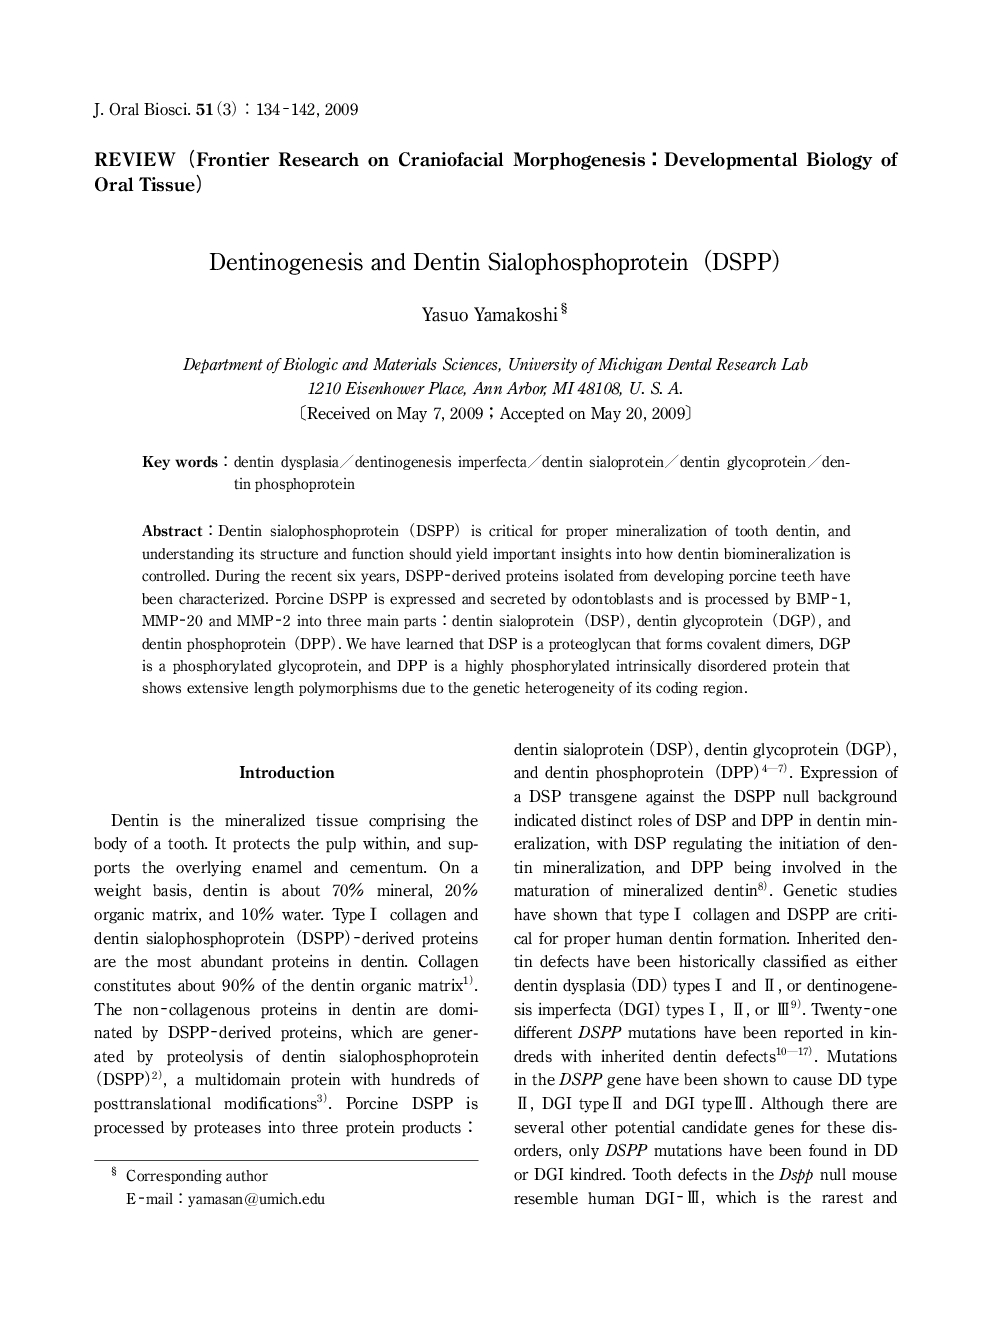 Dentinogenesis and Dentin Sialophosphoprotein (DSPP)